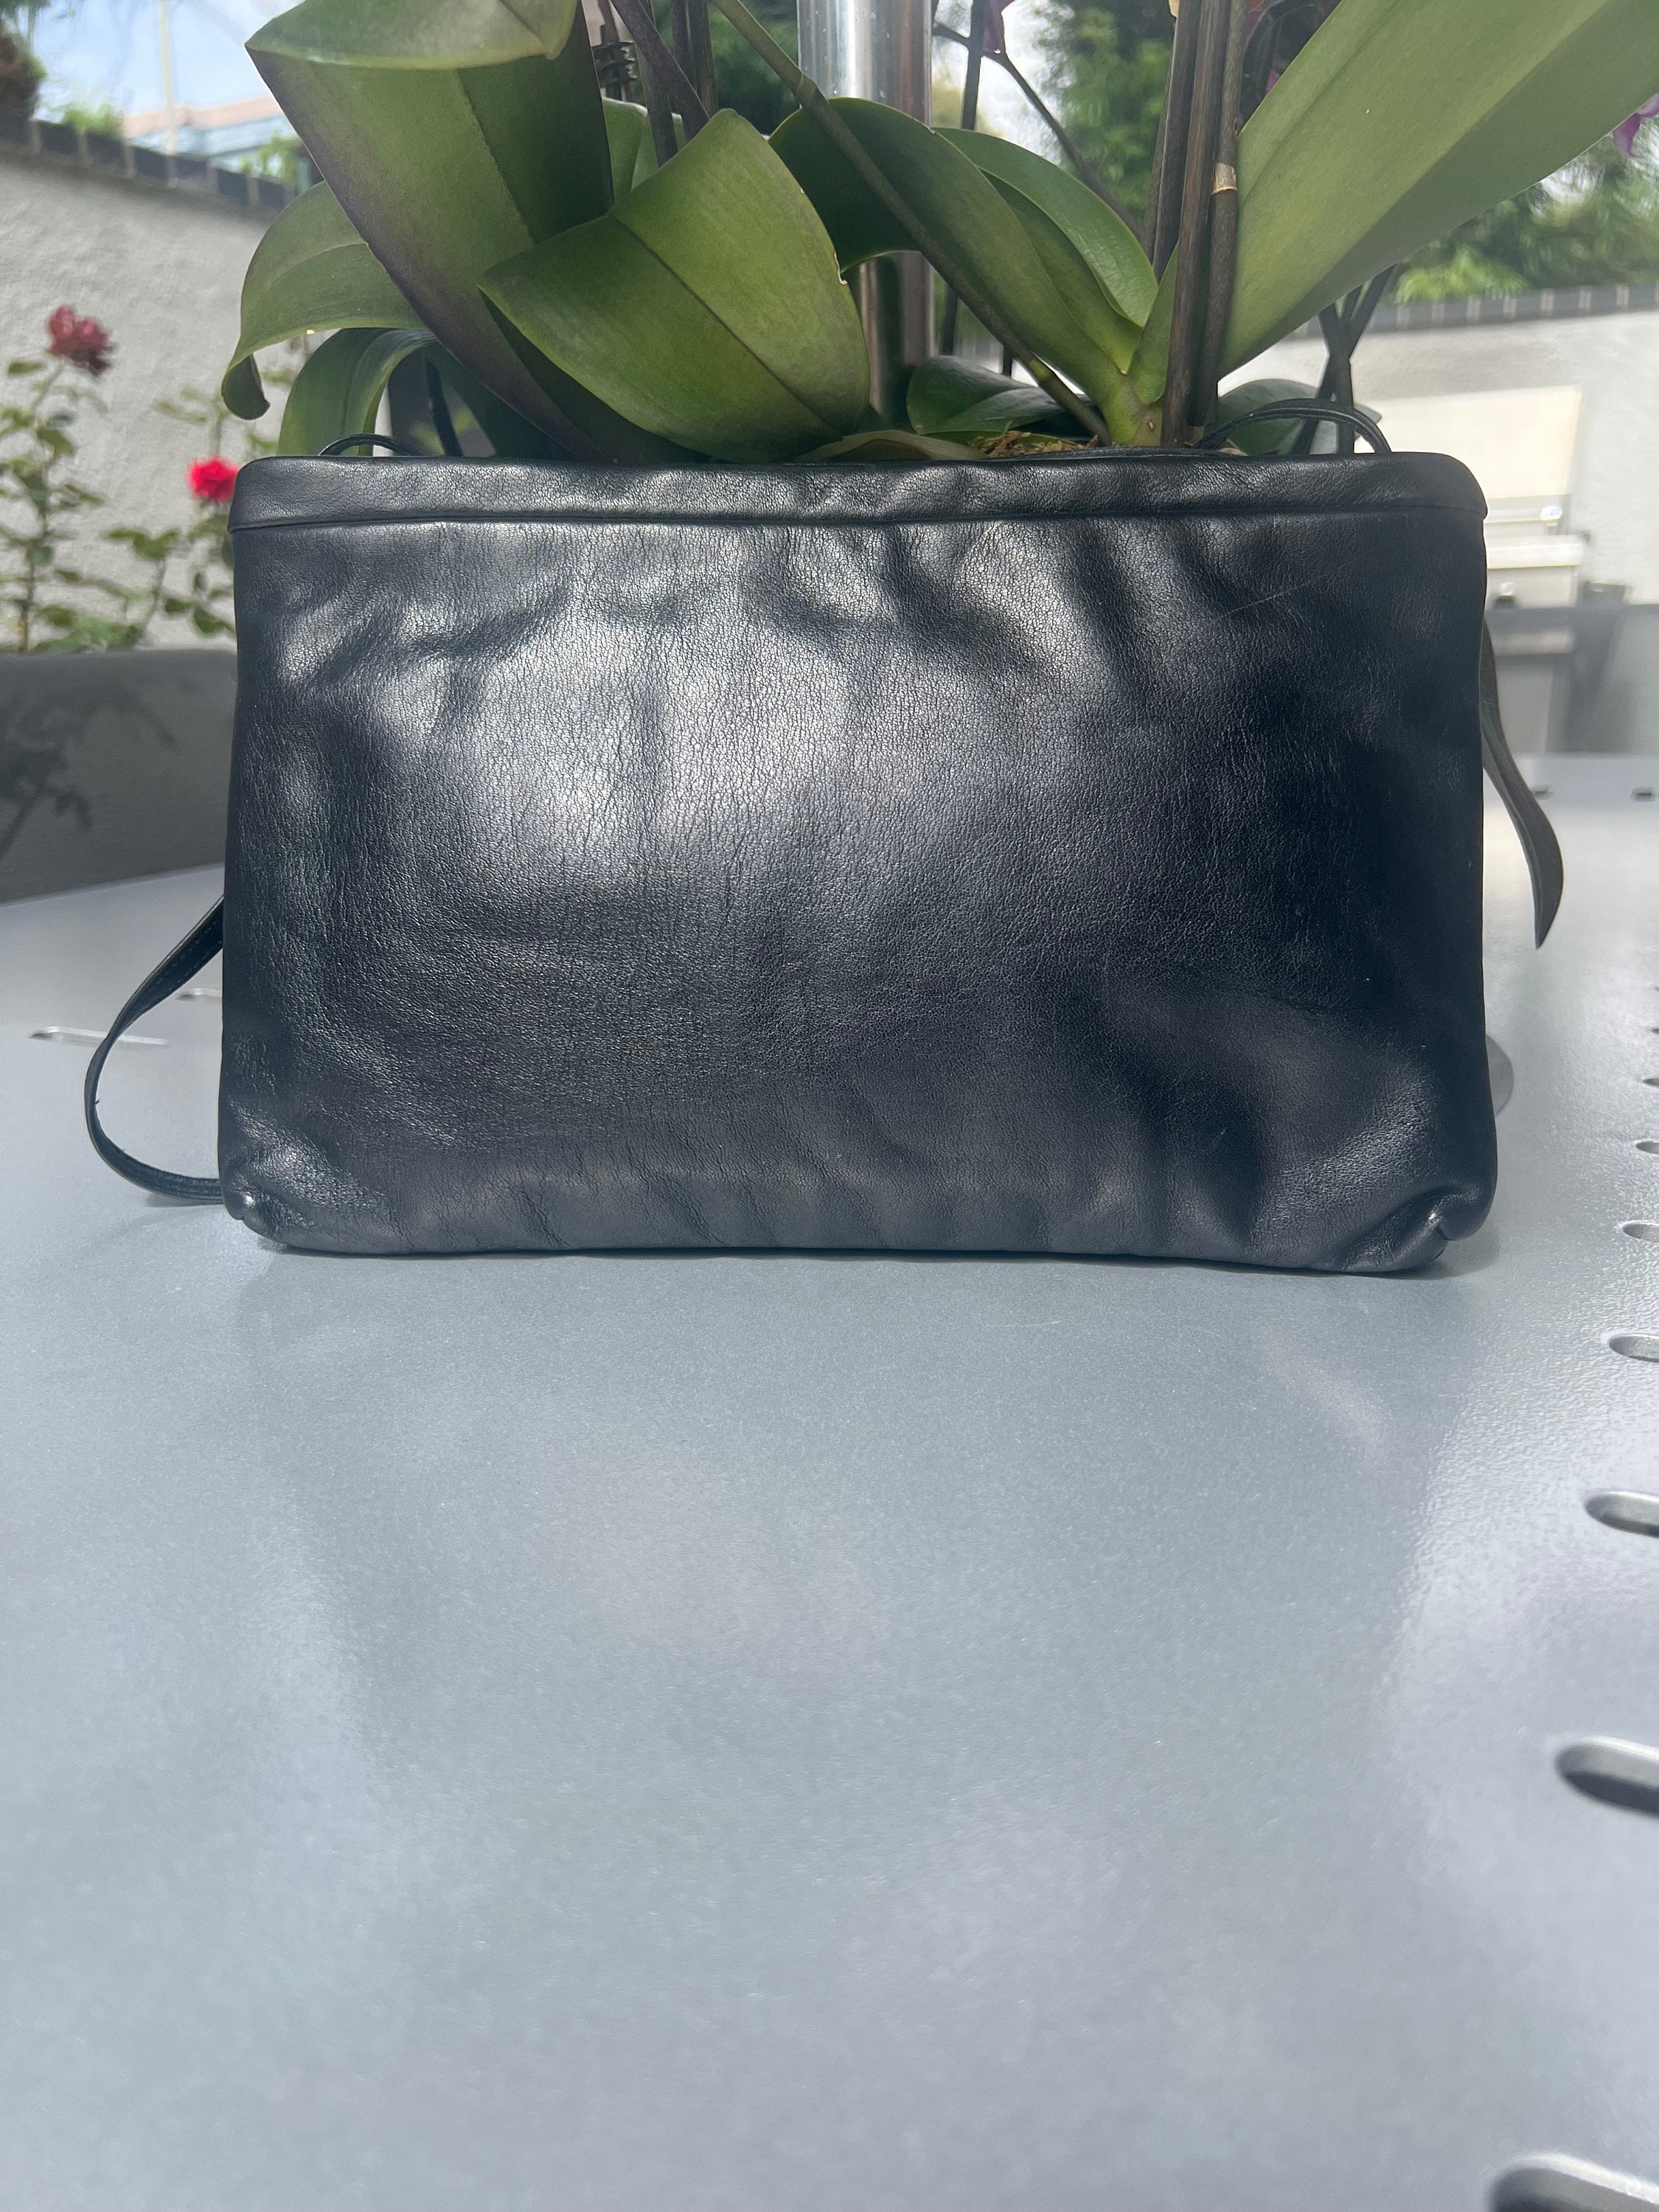 Miu Miu Bow Clutch Black Patent Leather-Trim Velvet Mini Crossbody Bag